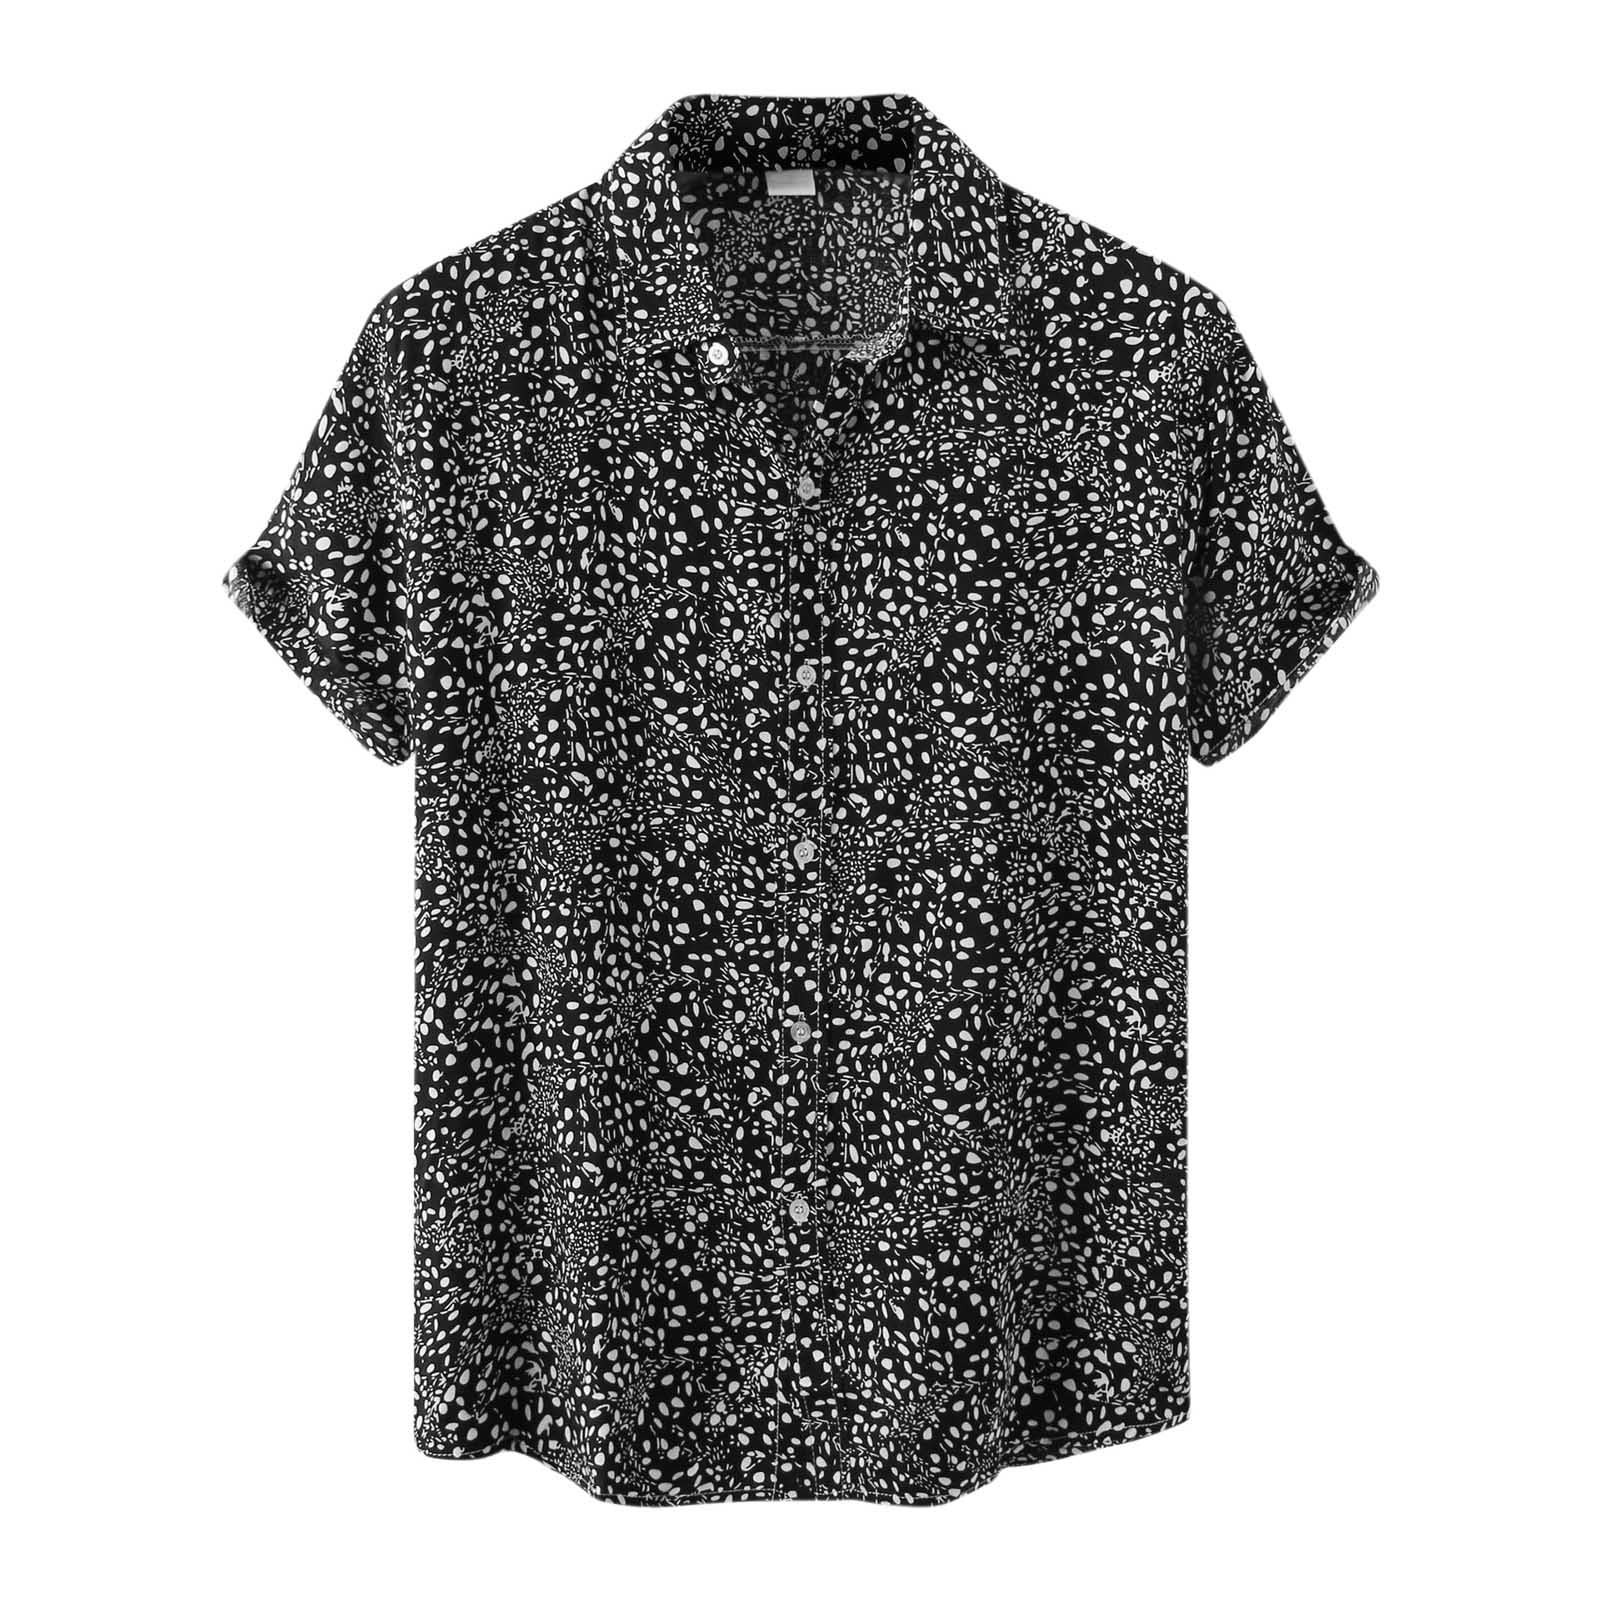 Casual Button Up Collared Shirt Hawaiian Shirt for Men Floral Printed ...